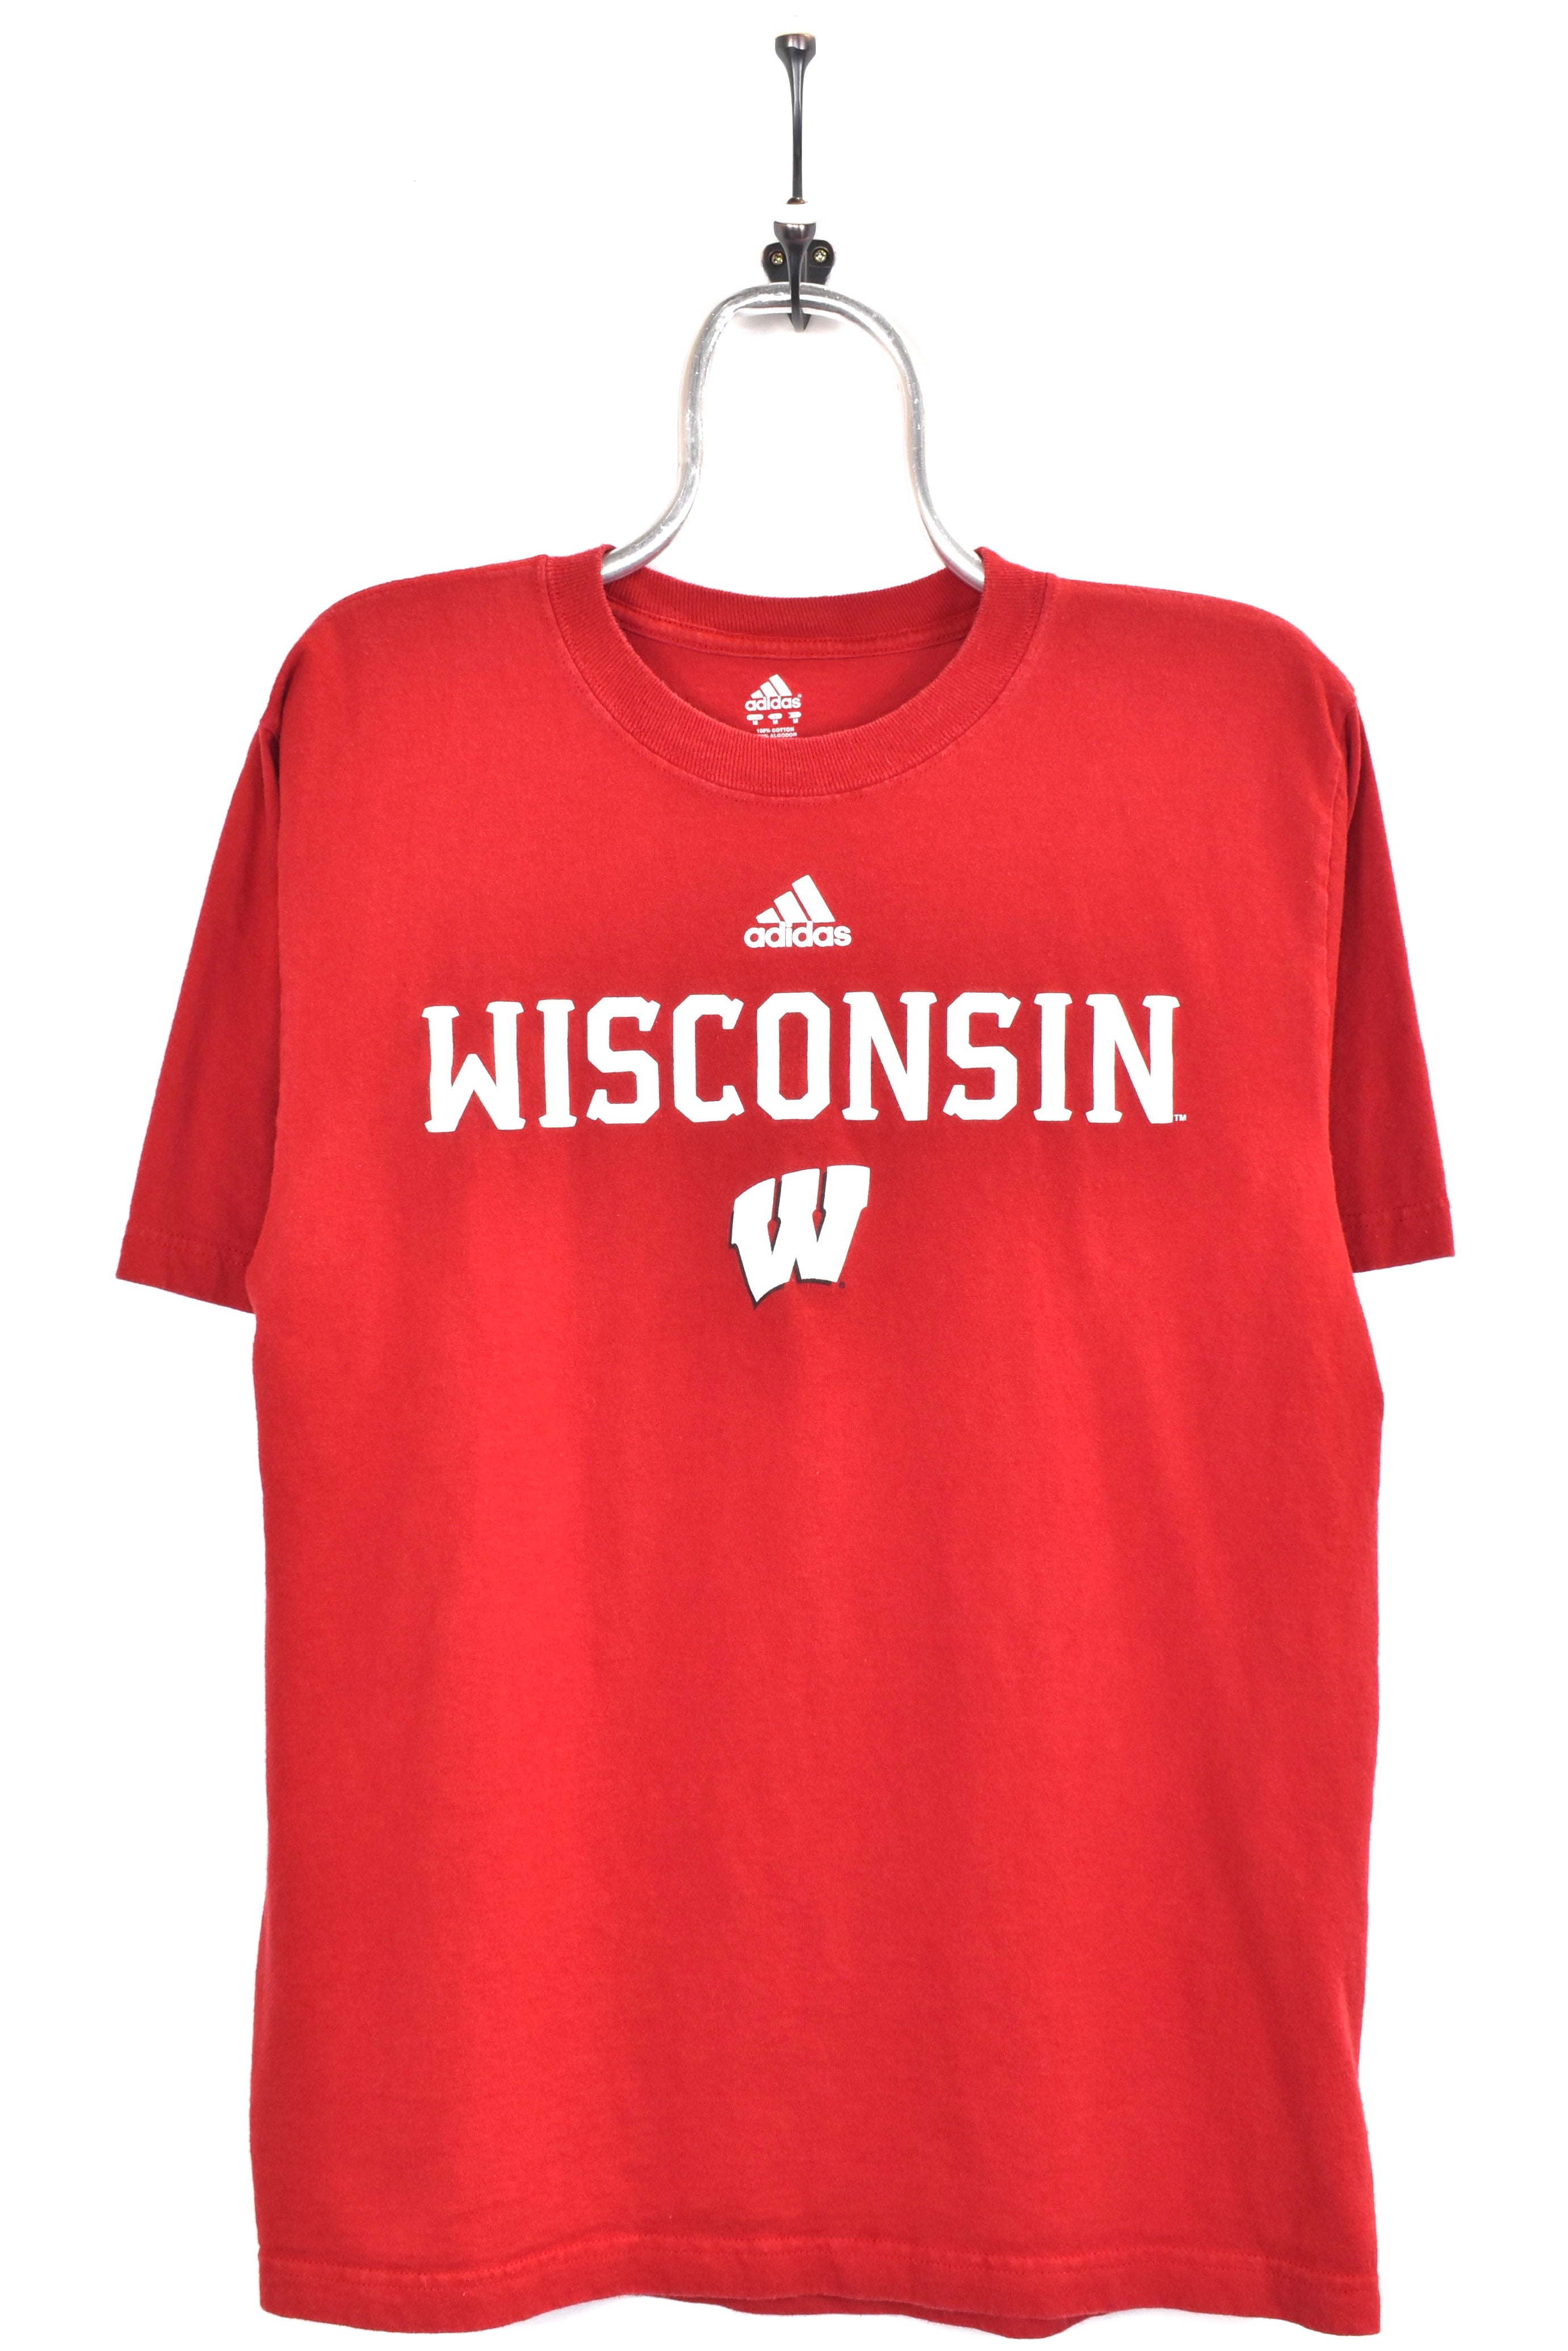 Vintage University of Wisconsin shirt, red graphic tee - AU Medium COLLEGE